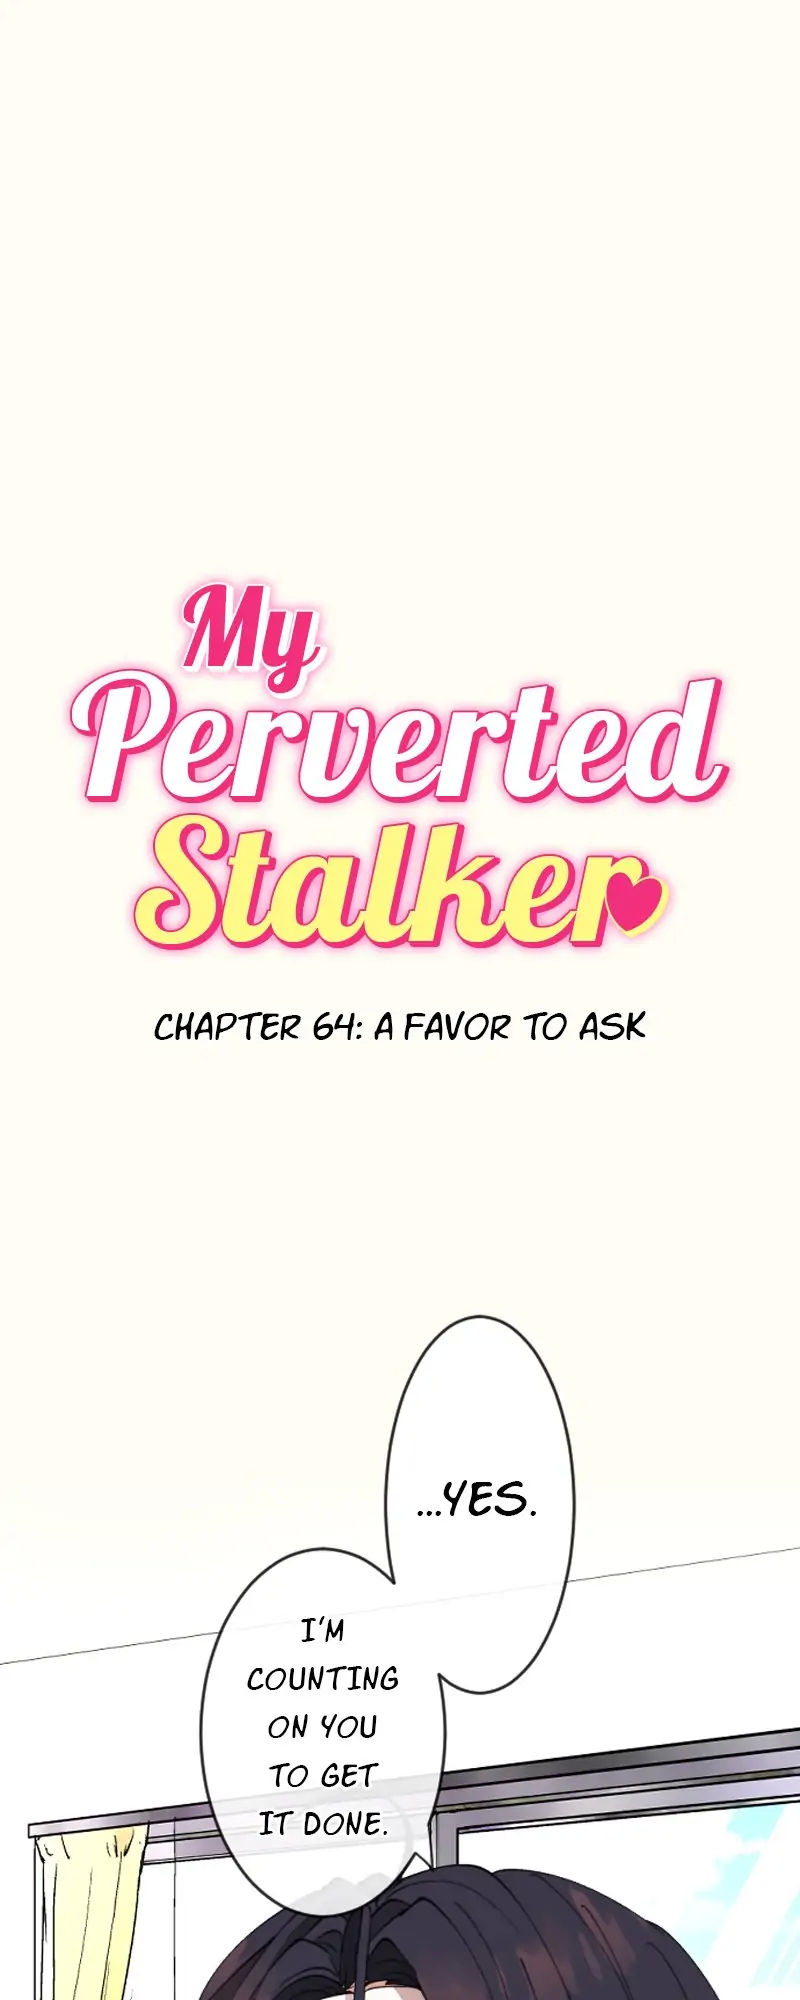 My Perverted Stalker - Page 1